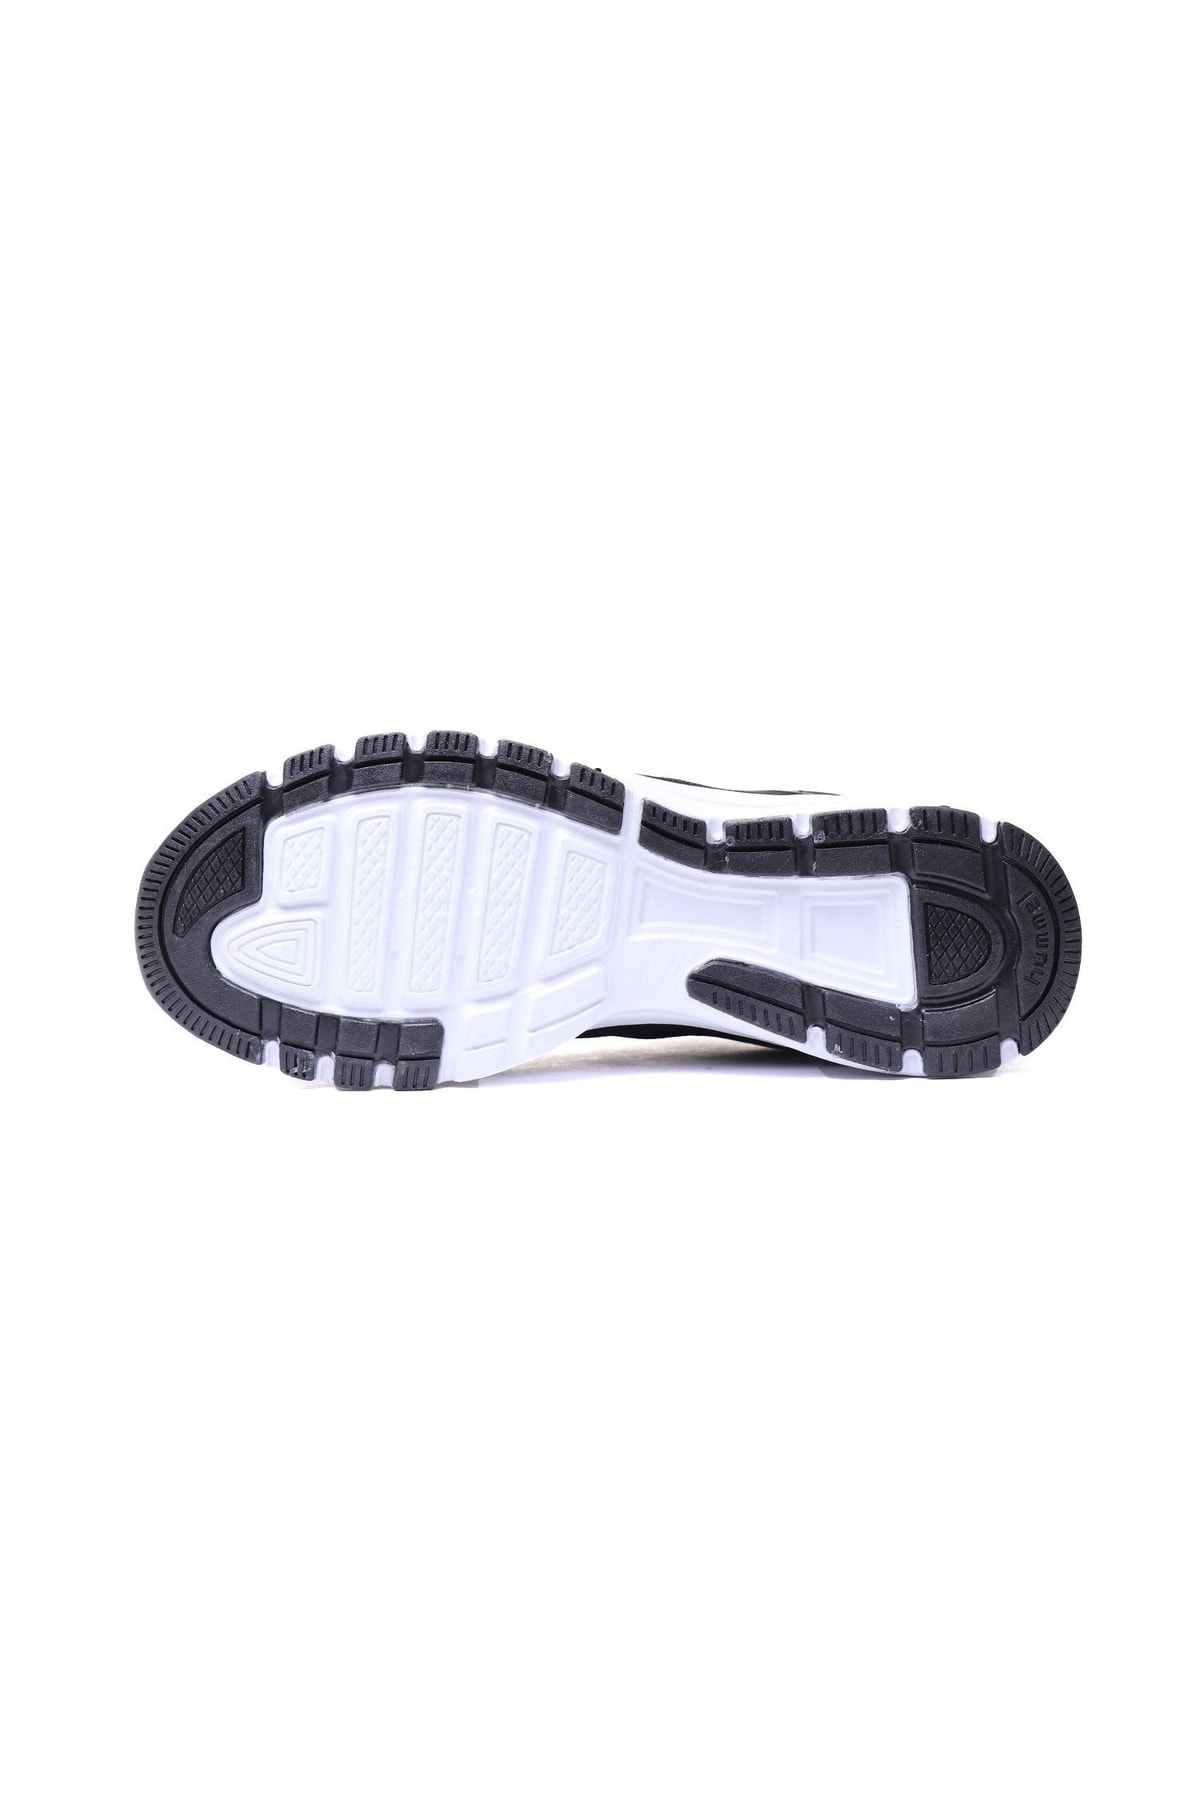 HUMMEL Porter X Erkek Spor Ayakkabı-siyah 900278-2001 QE7970